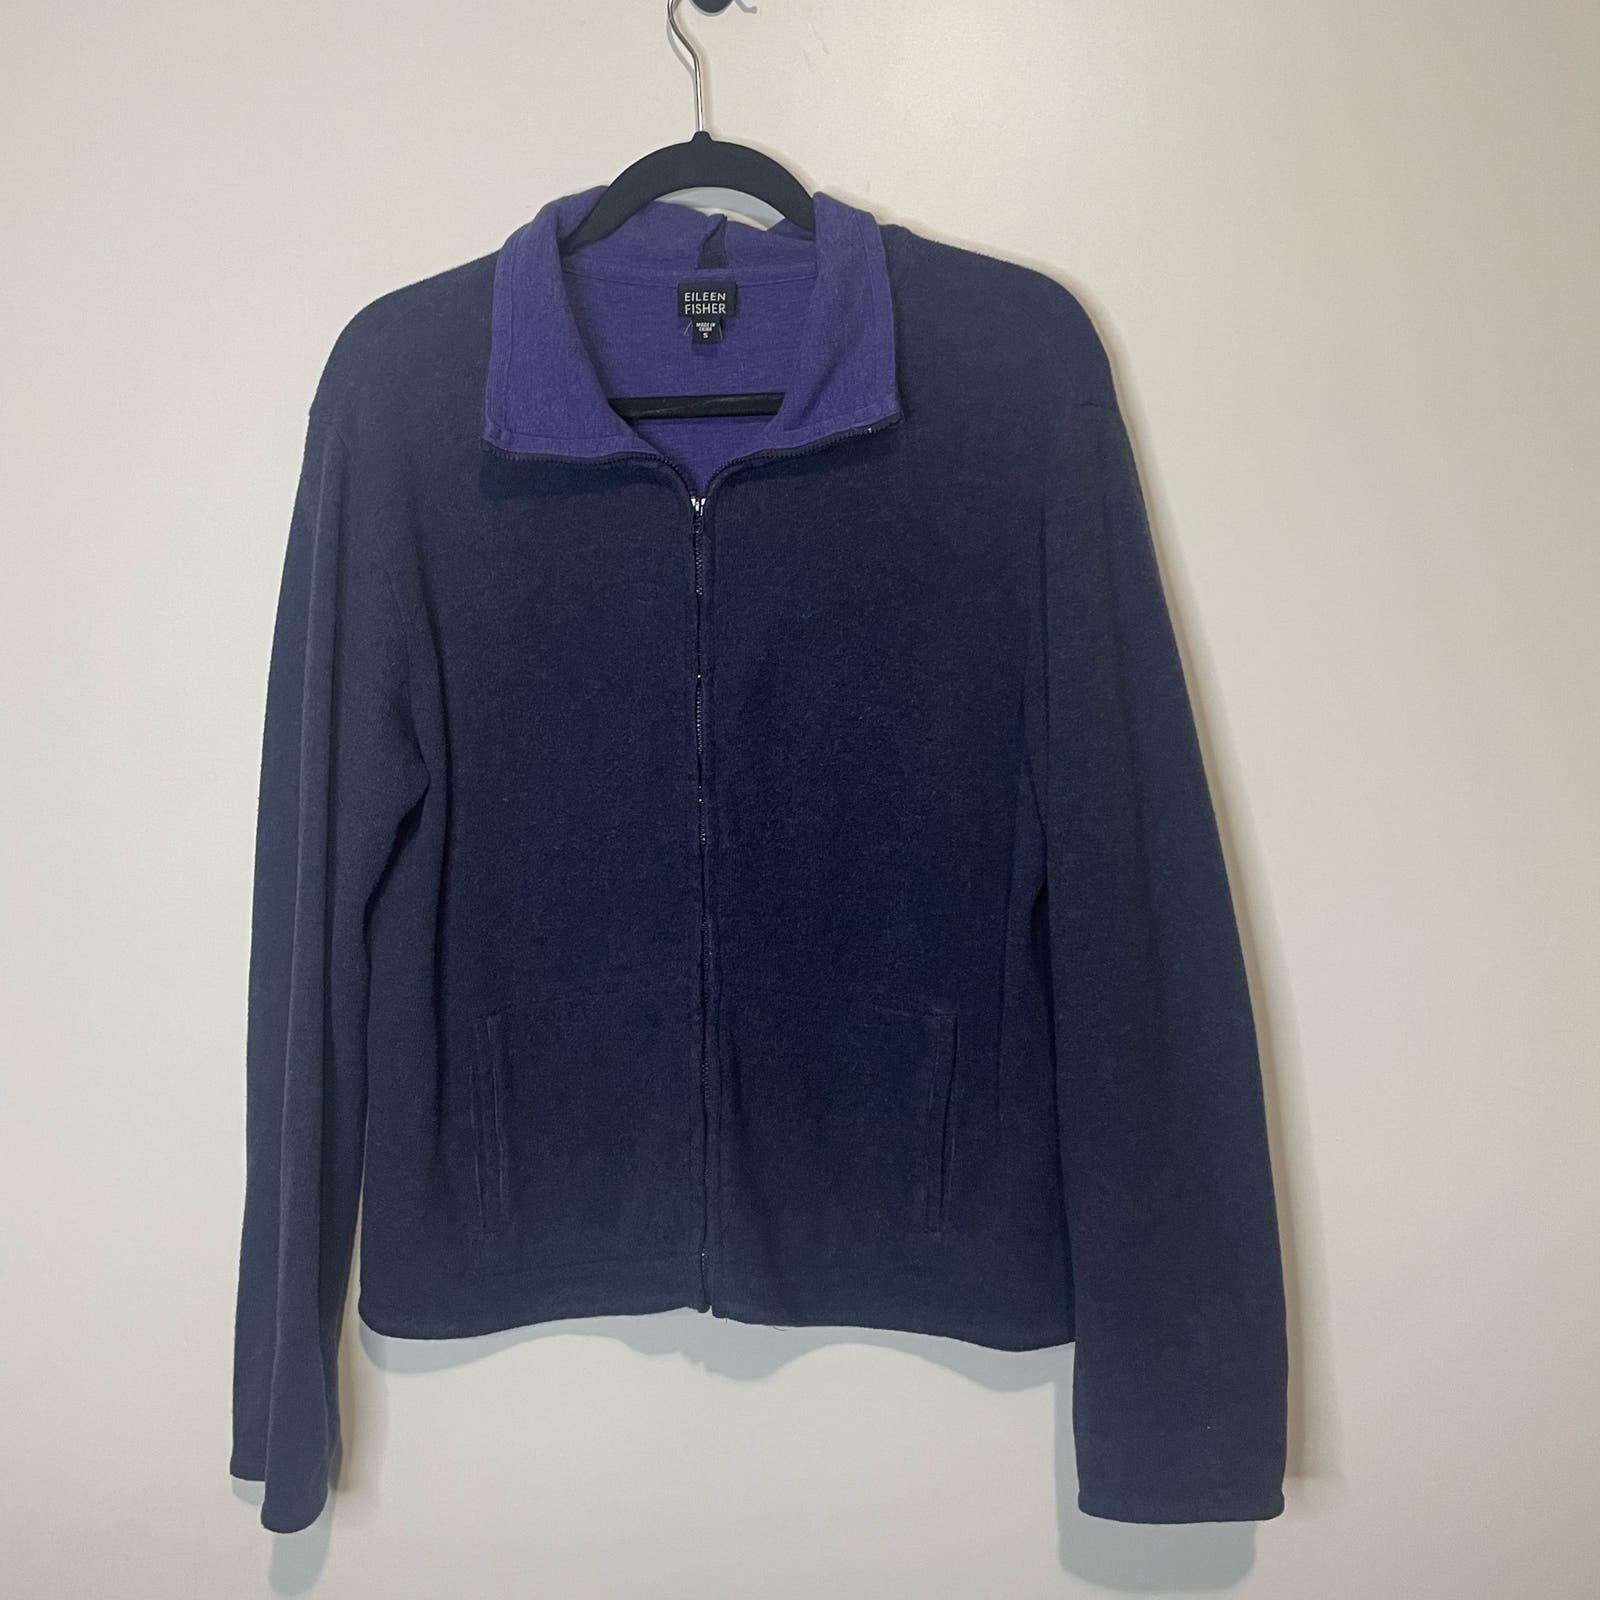 Eileen Fisher Women´s Full Zip Sweater Size Small iRrbUX0aU